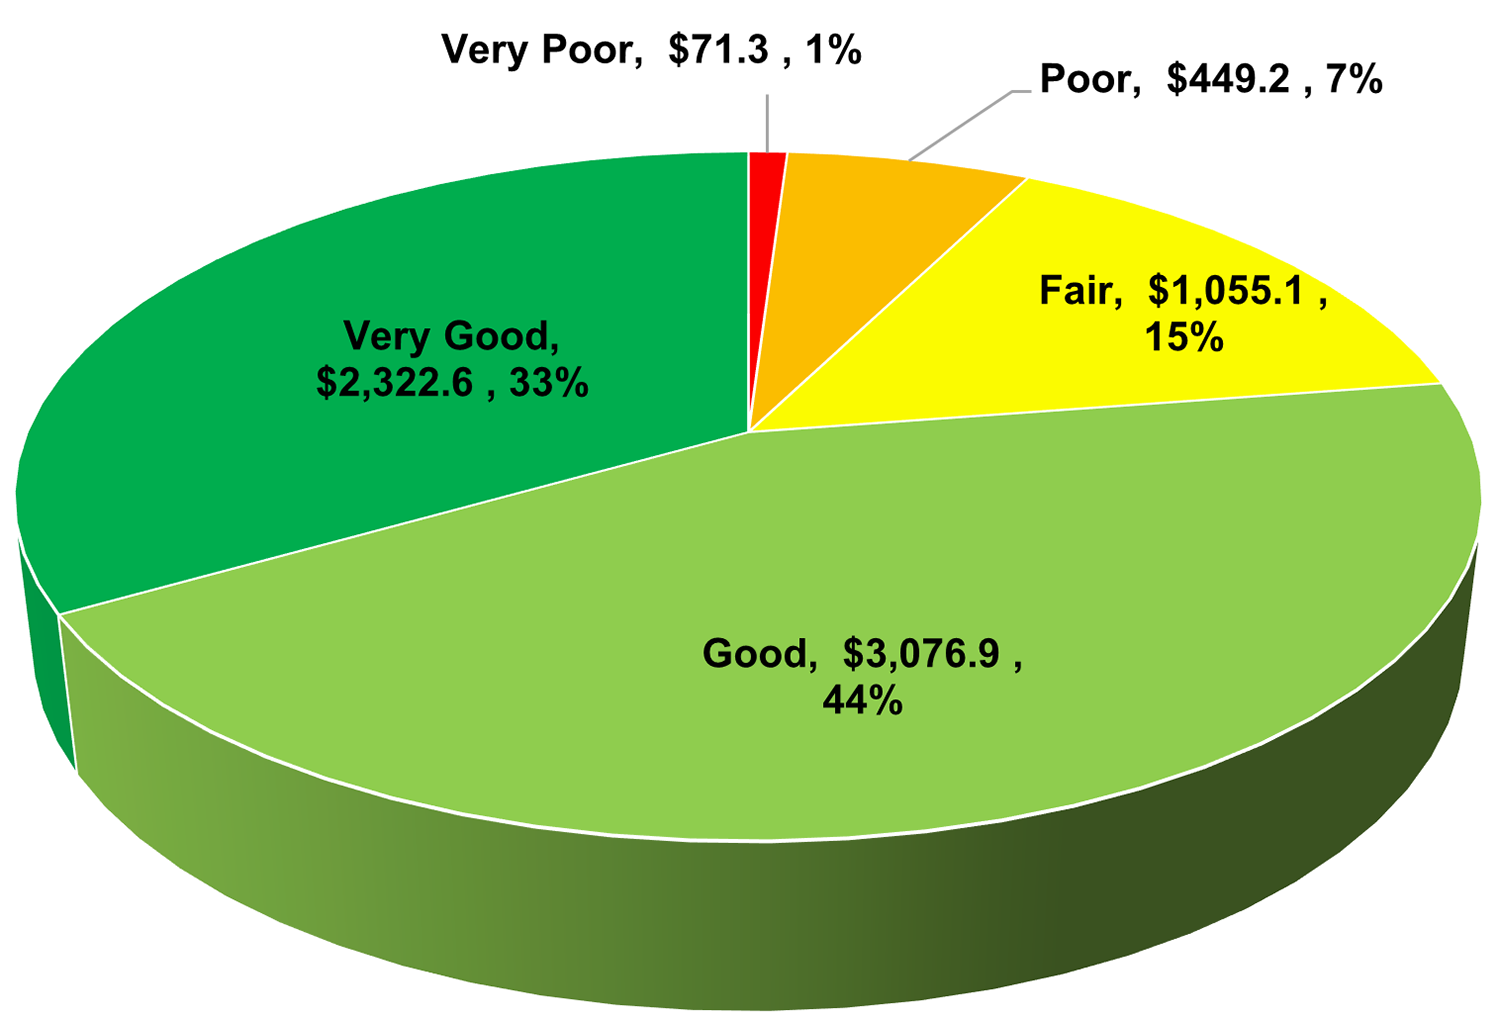 chart describing Summary of Brampton's Asset by Condition ($ Millions); Very Good: $2,322.6; Good: $3,076.9; Fair: $1,055.1; Poor: $449.2; Very Poor: $71.3